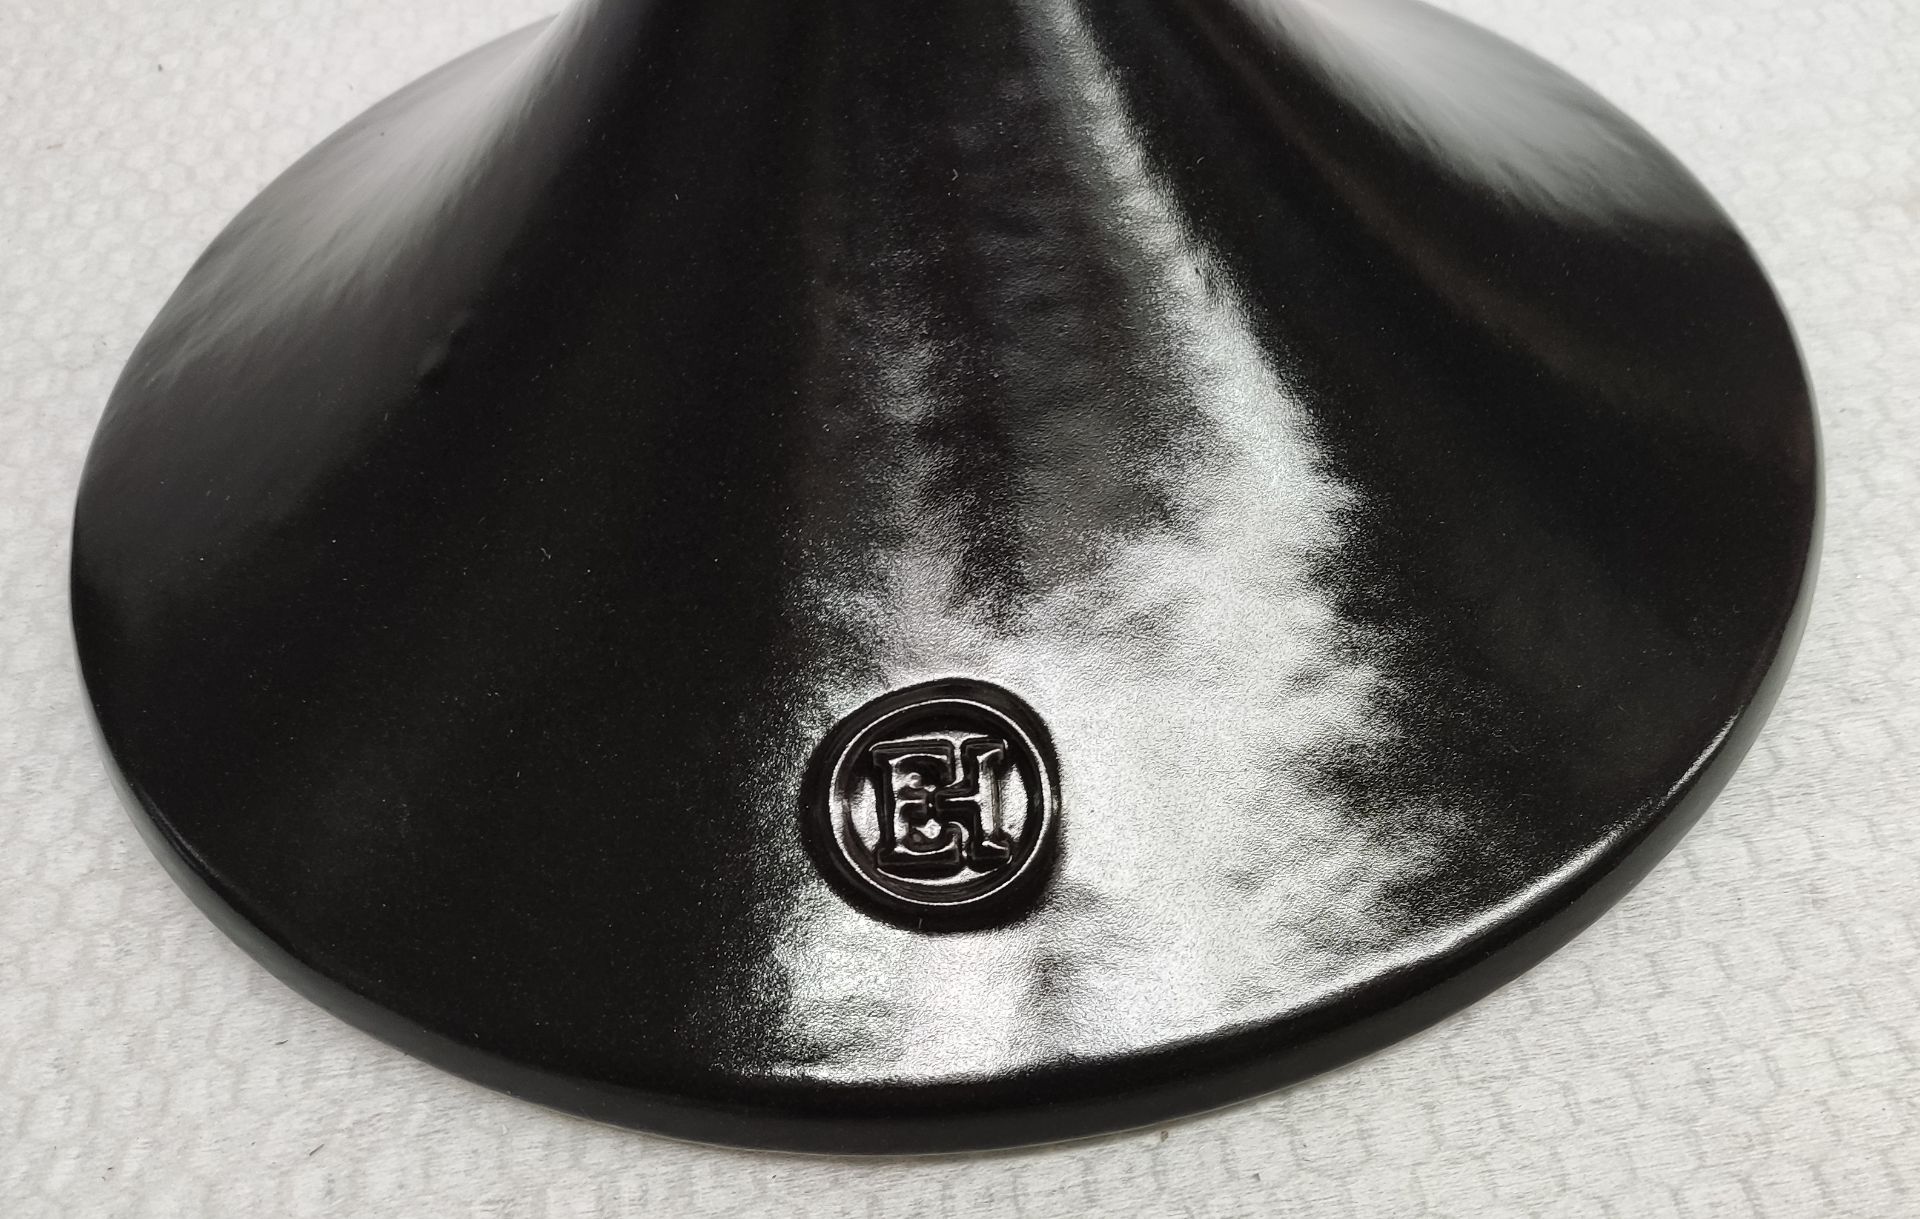 1 x EMILE HENRY 26cm Charcoal Tagine 1.8L - Boxed - Original RRP £99.99 - Ref: 7137056/HJL326/C12/ - Image 13 of 13